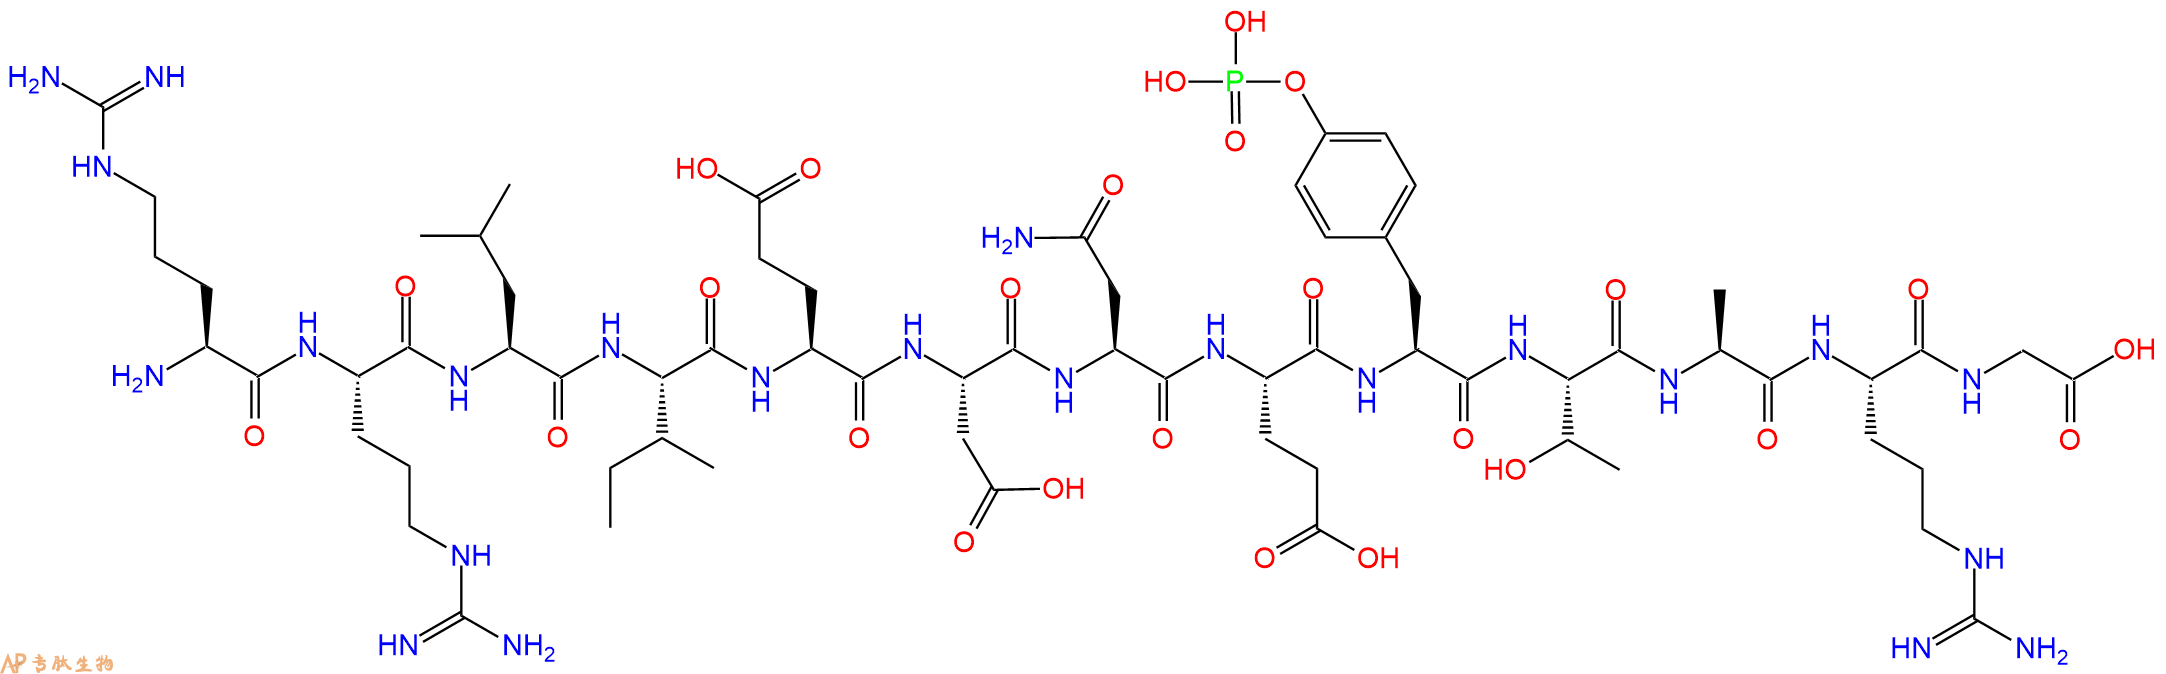 专肽生物产品pp60 (v-SRC) Autophosphorylation Site, Phosphoryla176042-83-4